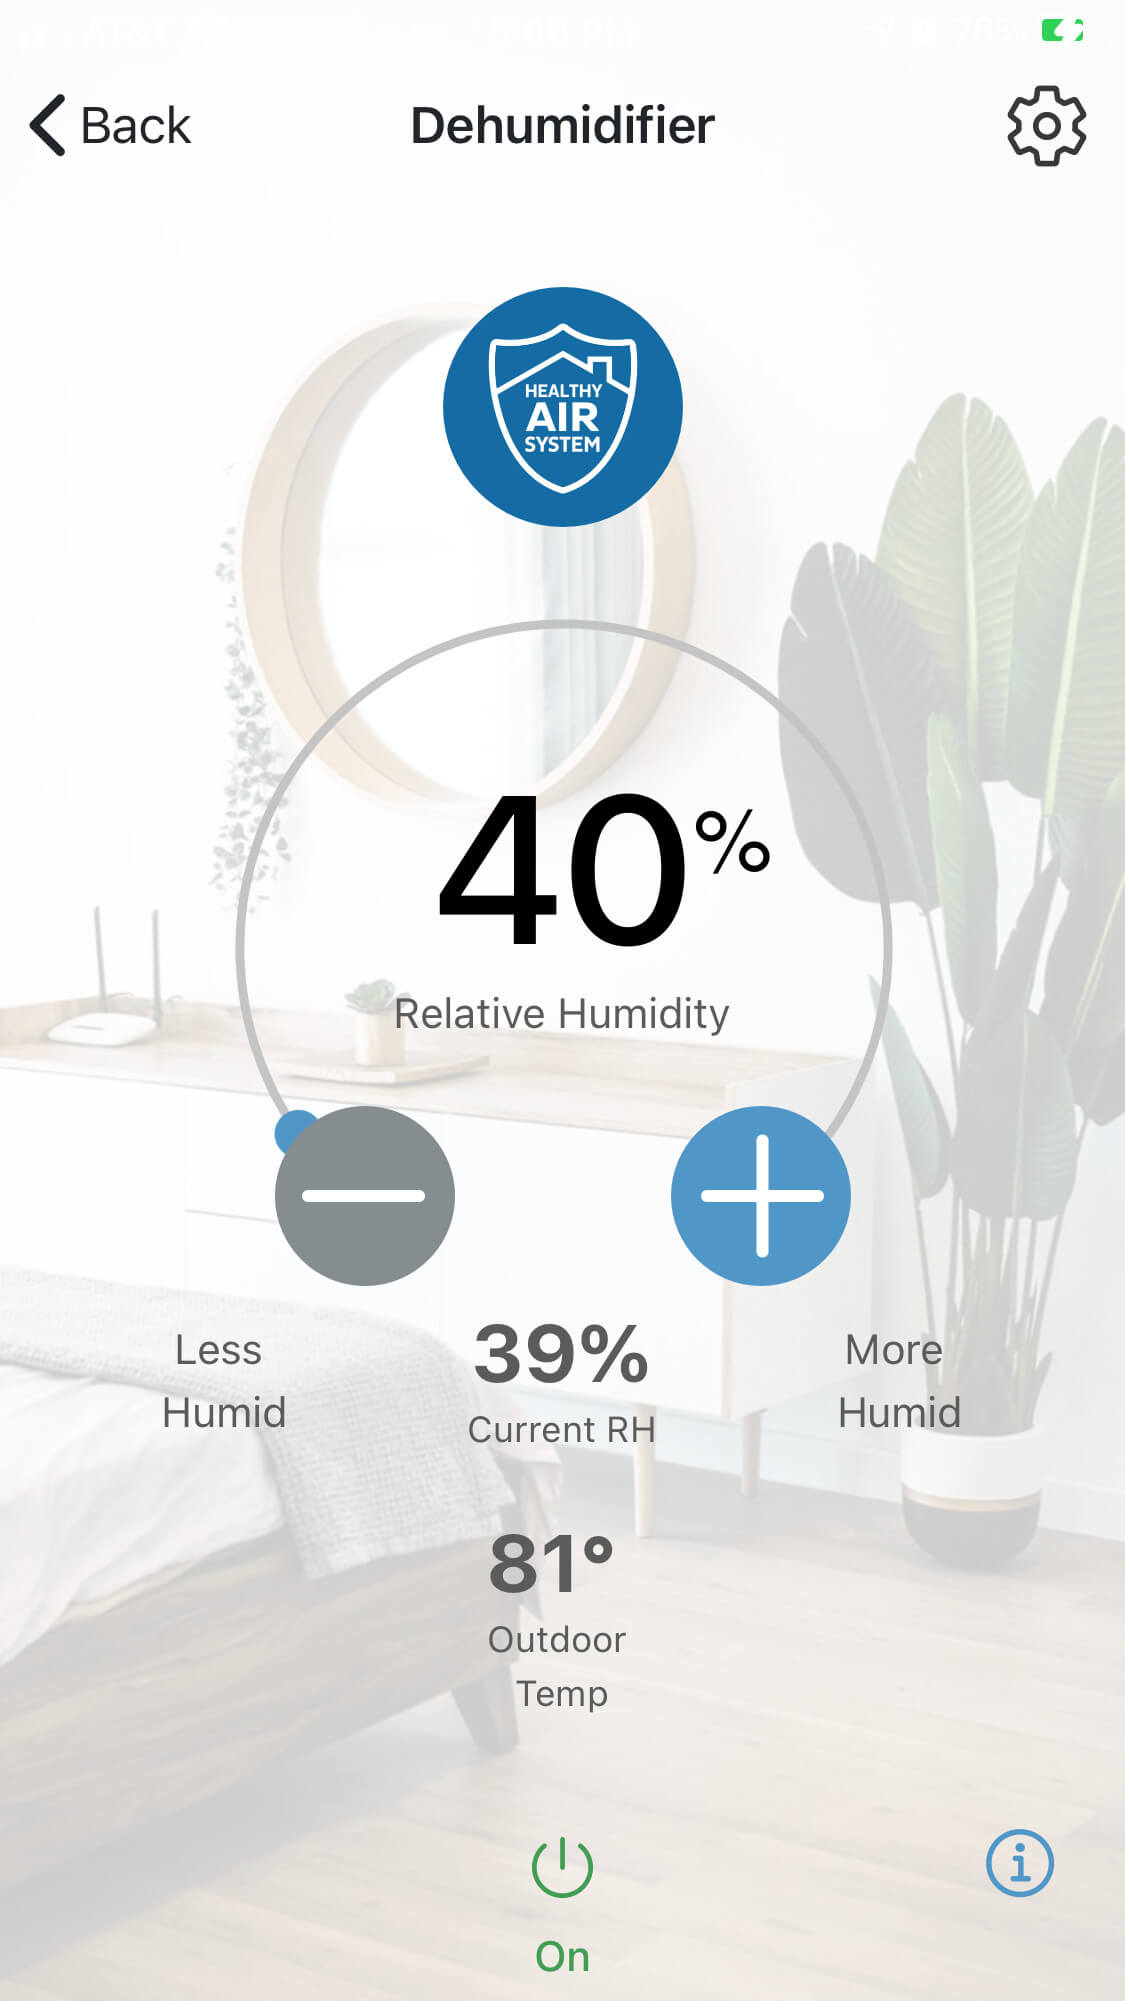 aprilaire wi fi thermostat app dehumidifier screen user guide photo